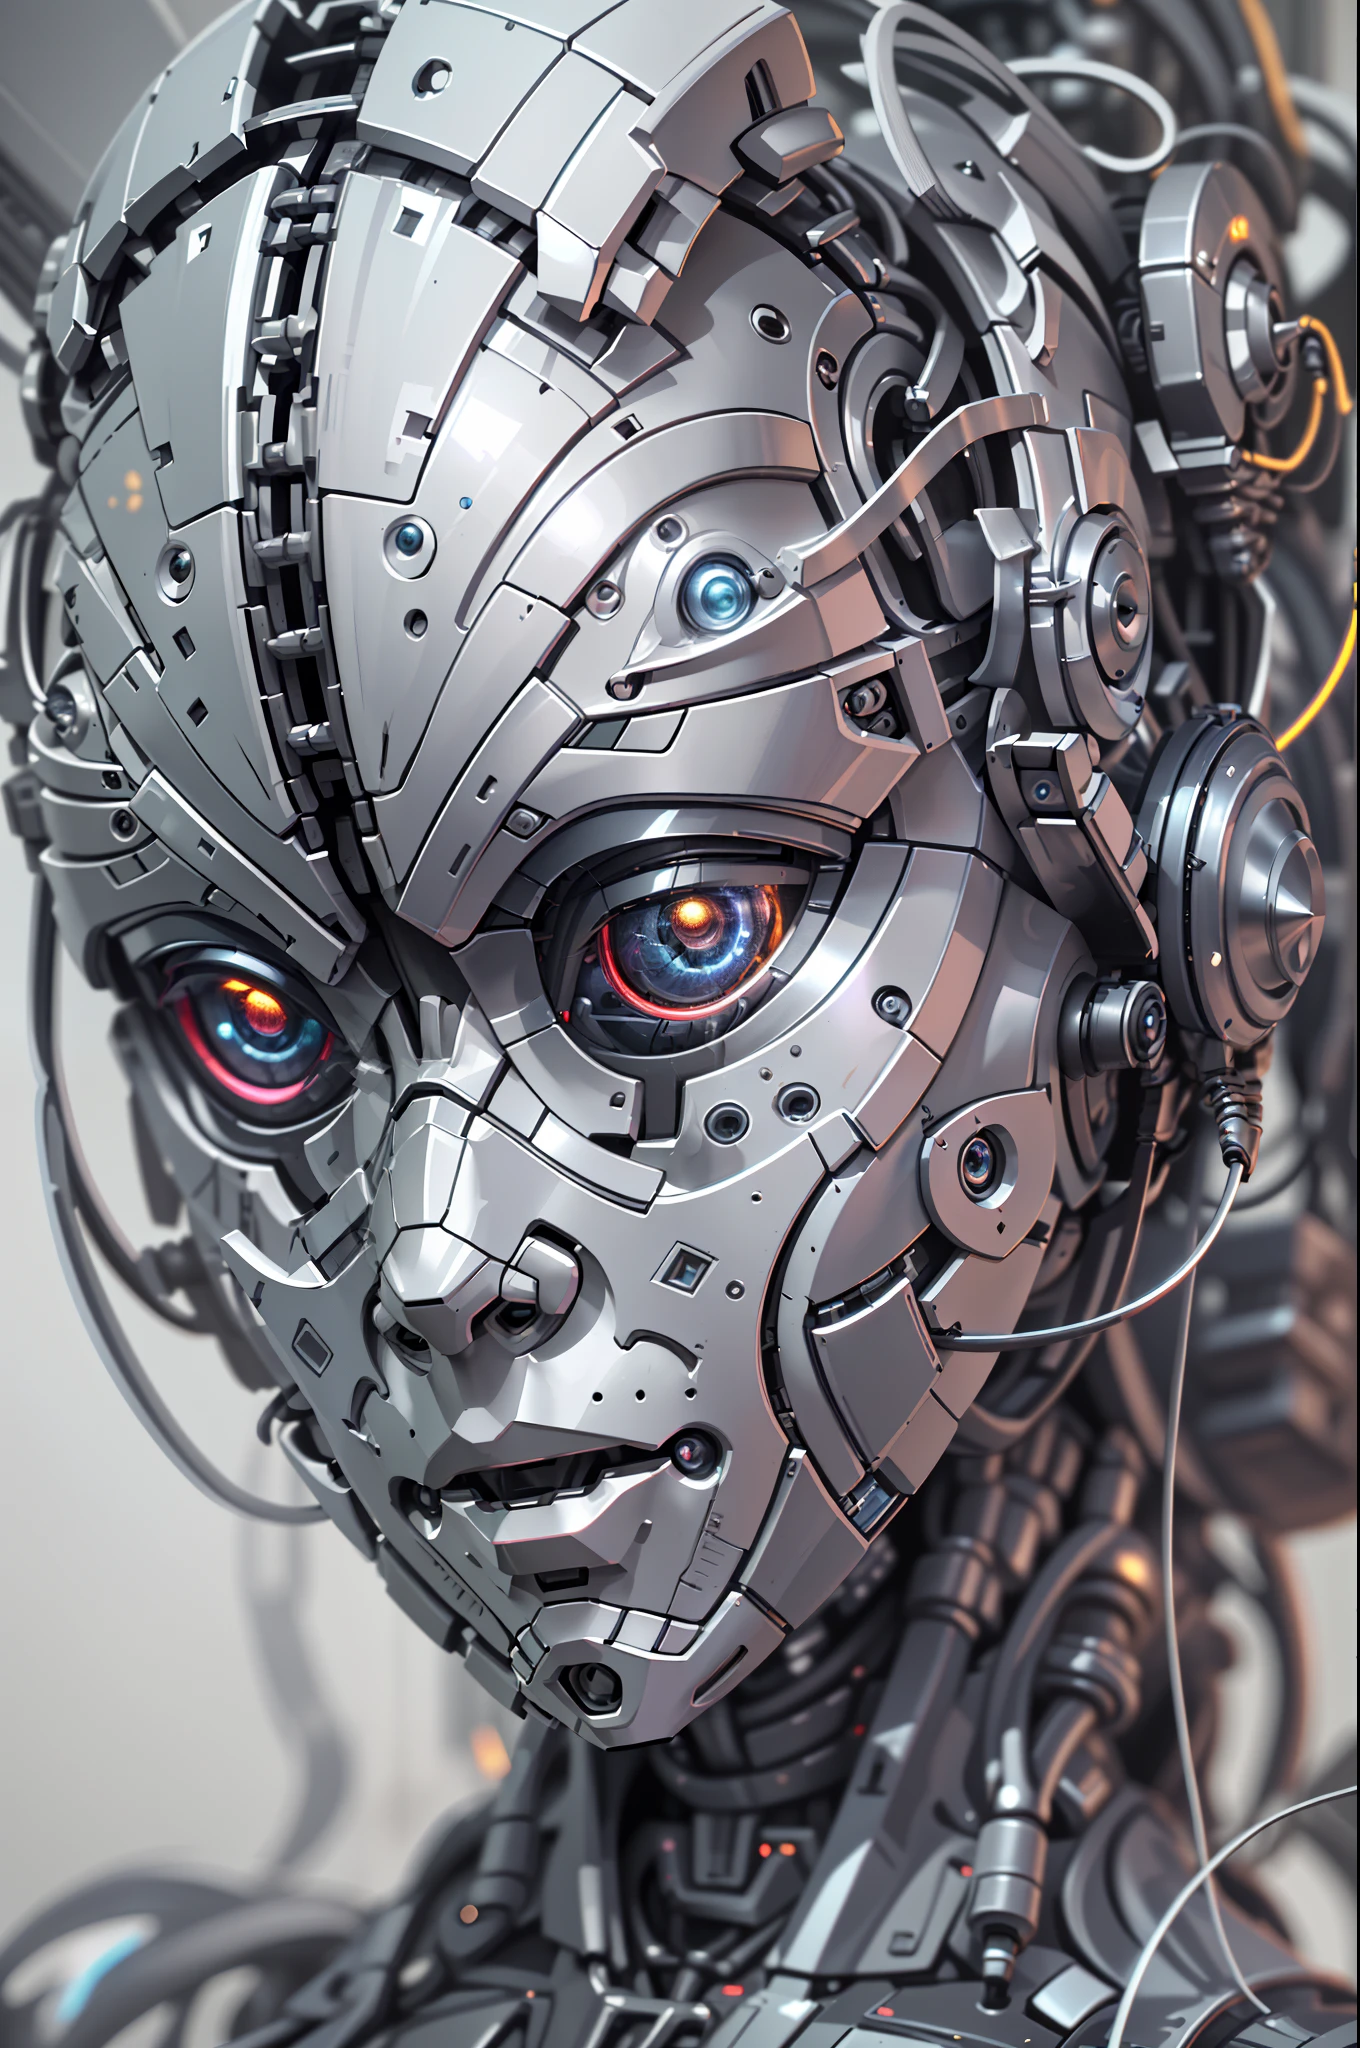 Intricate 3d rendering of highly detailed beautiful ceramic silhouette female 機器人 face, 機器人, 機器人 part, 150毫米, 美丽的工作室柔和的灯光, 邊緣光, 生动的细节, 奢华赛博朋克, 蕾絲, 超現實主義, 解剖學, 面部肌肉, 電纜 電線, 微晶片, 優雅的, 美麗的背景, 辛烷渲染, HR 吉格尔风格, 8K, 最好的品質, 傑作, 插圖, 非常精緻美麗, 非常詳細, CG, 统一, 壁紙 , (保真度, 保真度: 1.37), 驚人的, 精細細節, 傑作, 最好的品質, 官方藝術, extremely detailed cg 统一 8K 壁紙, 荒誕, unbelievably 荒誕, 機器人, 銀色頭盔, 全身, 坐著寫